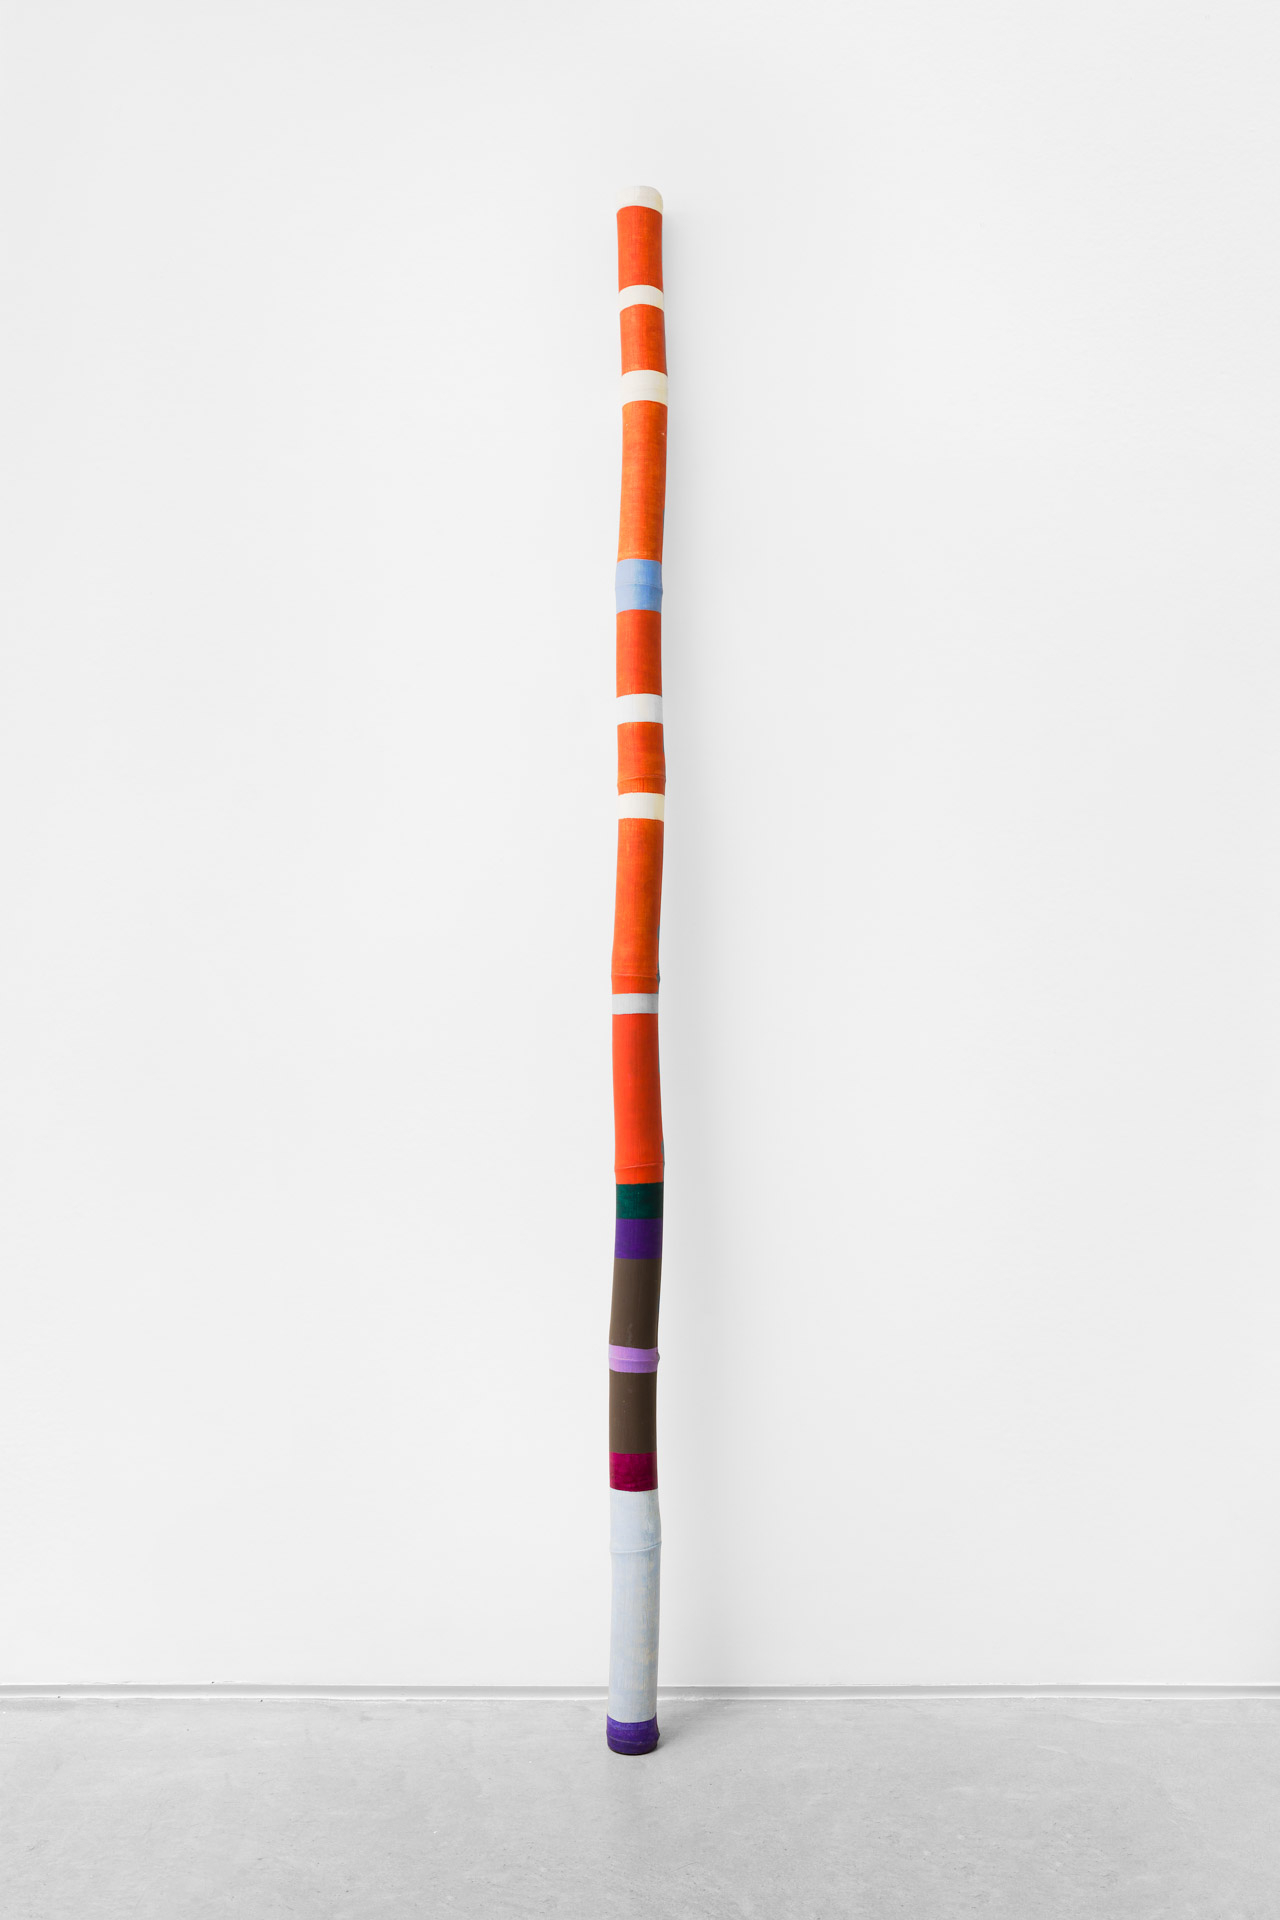 Ione Saldanha | Sem Título (Bambu), 1969